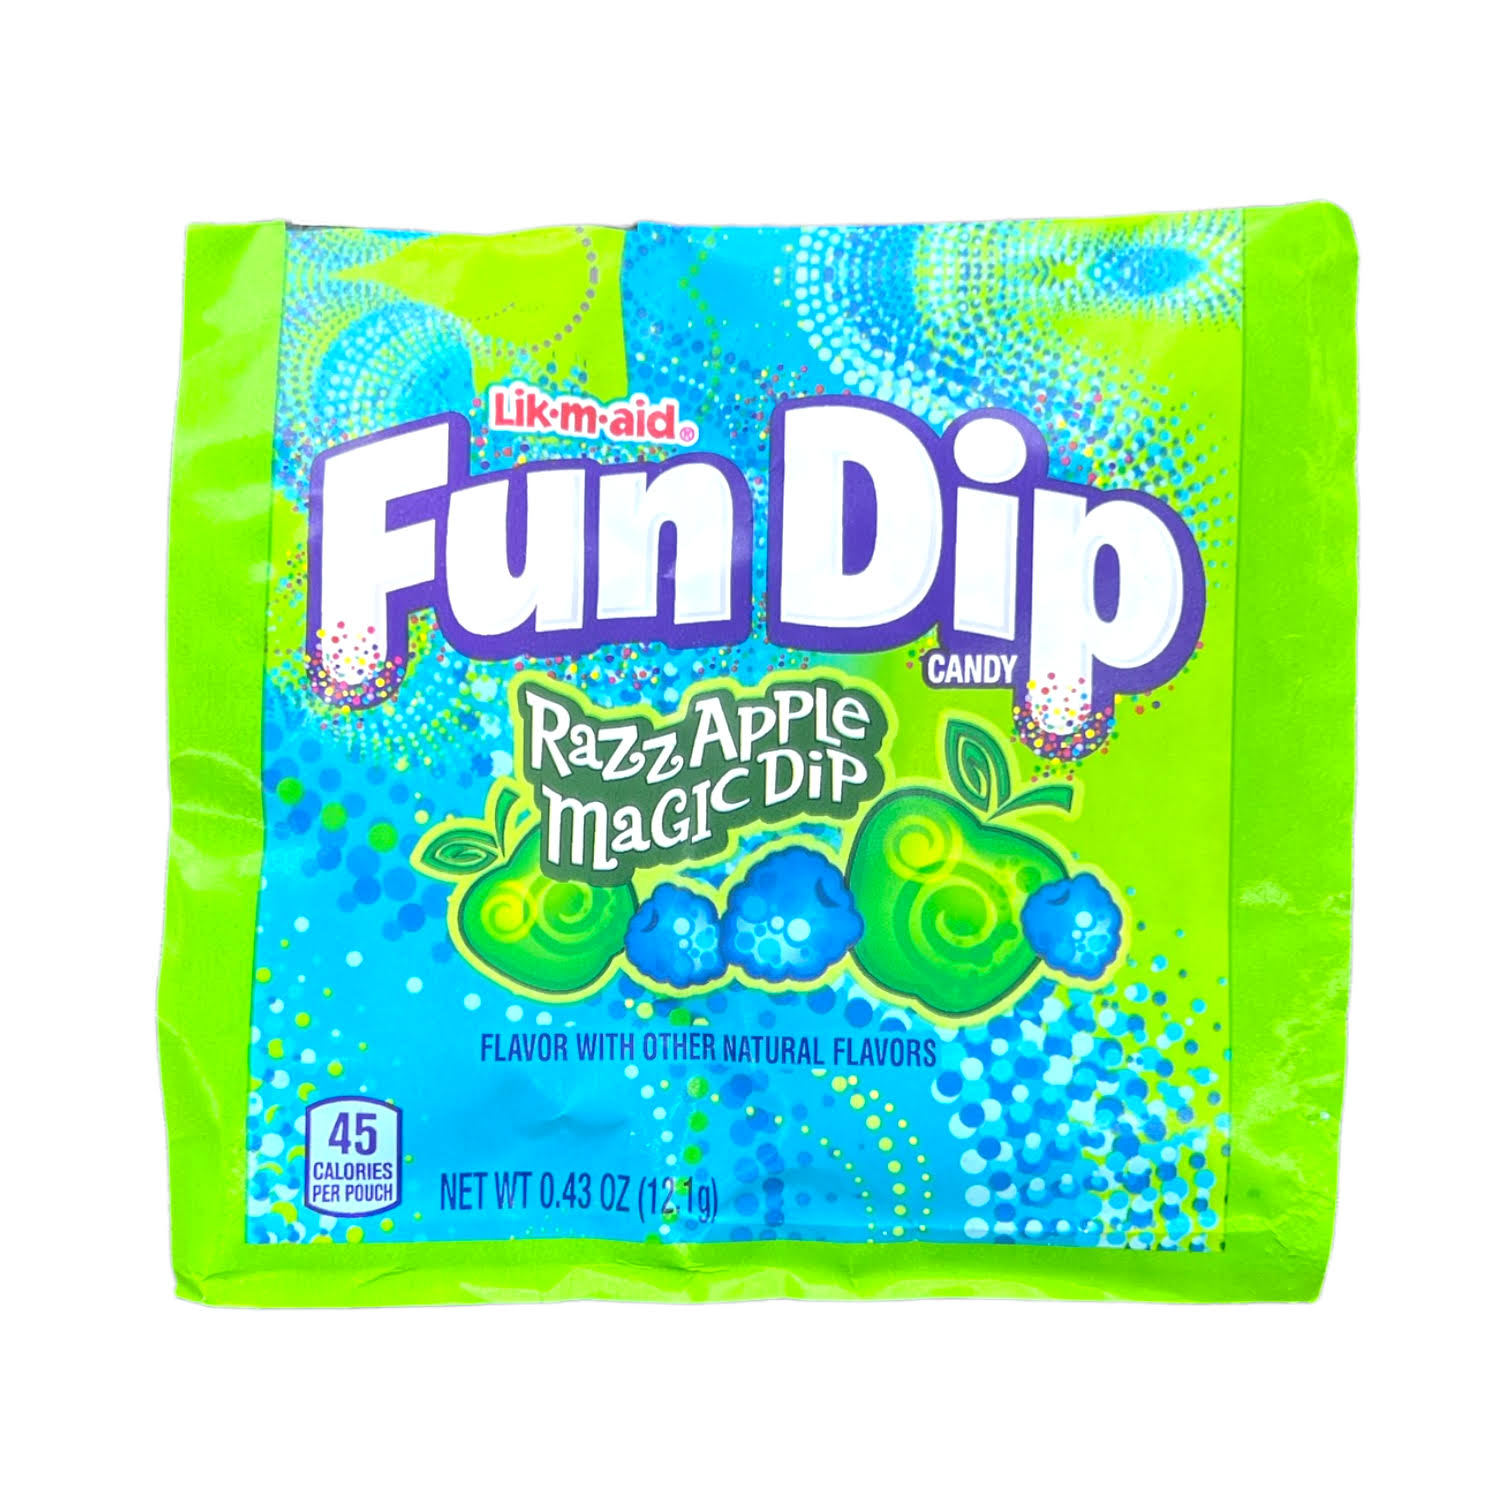 Fun Dip Razz Apple